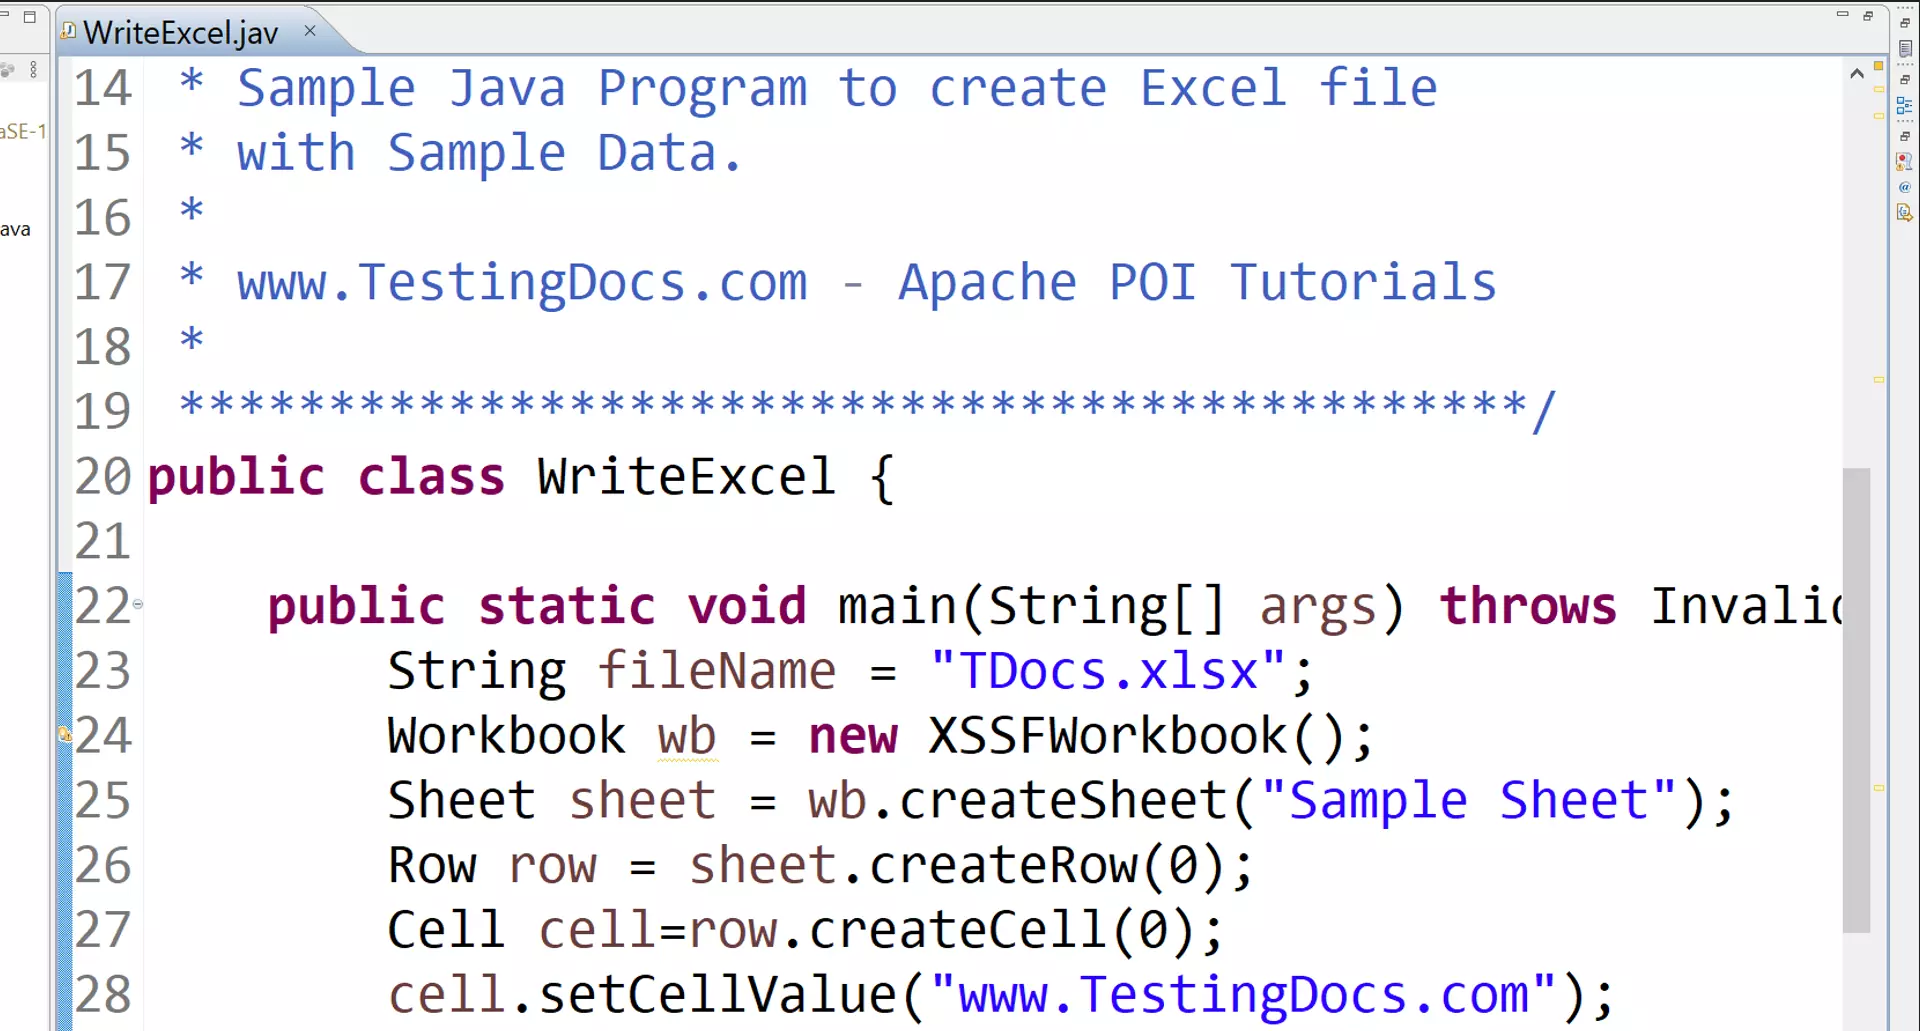 MS Excel Java Program